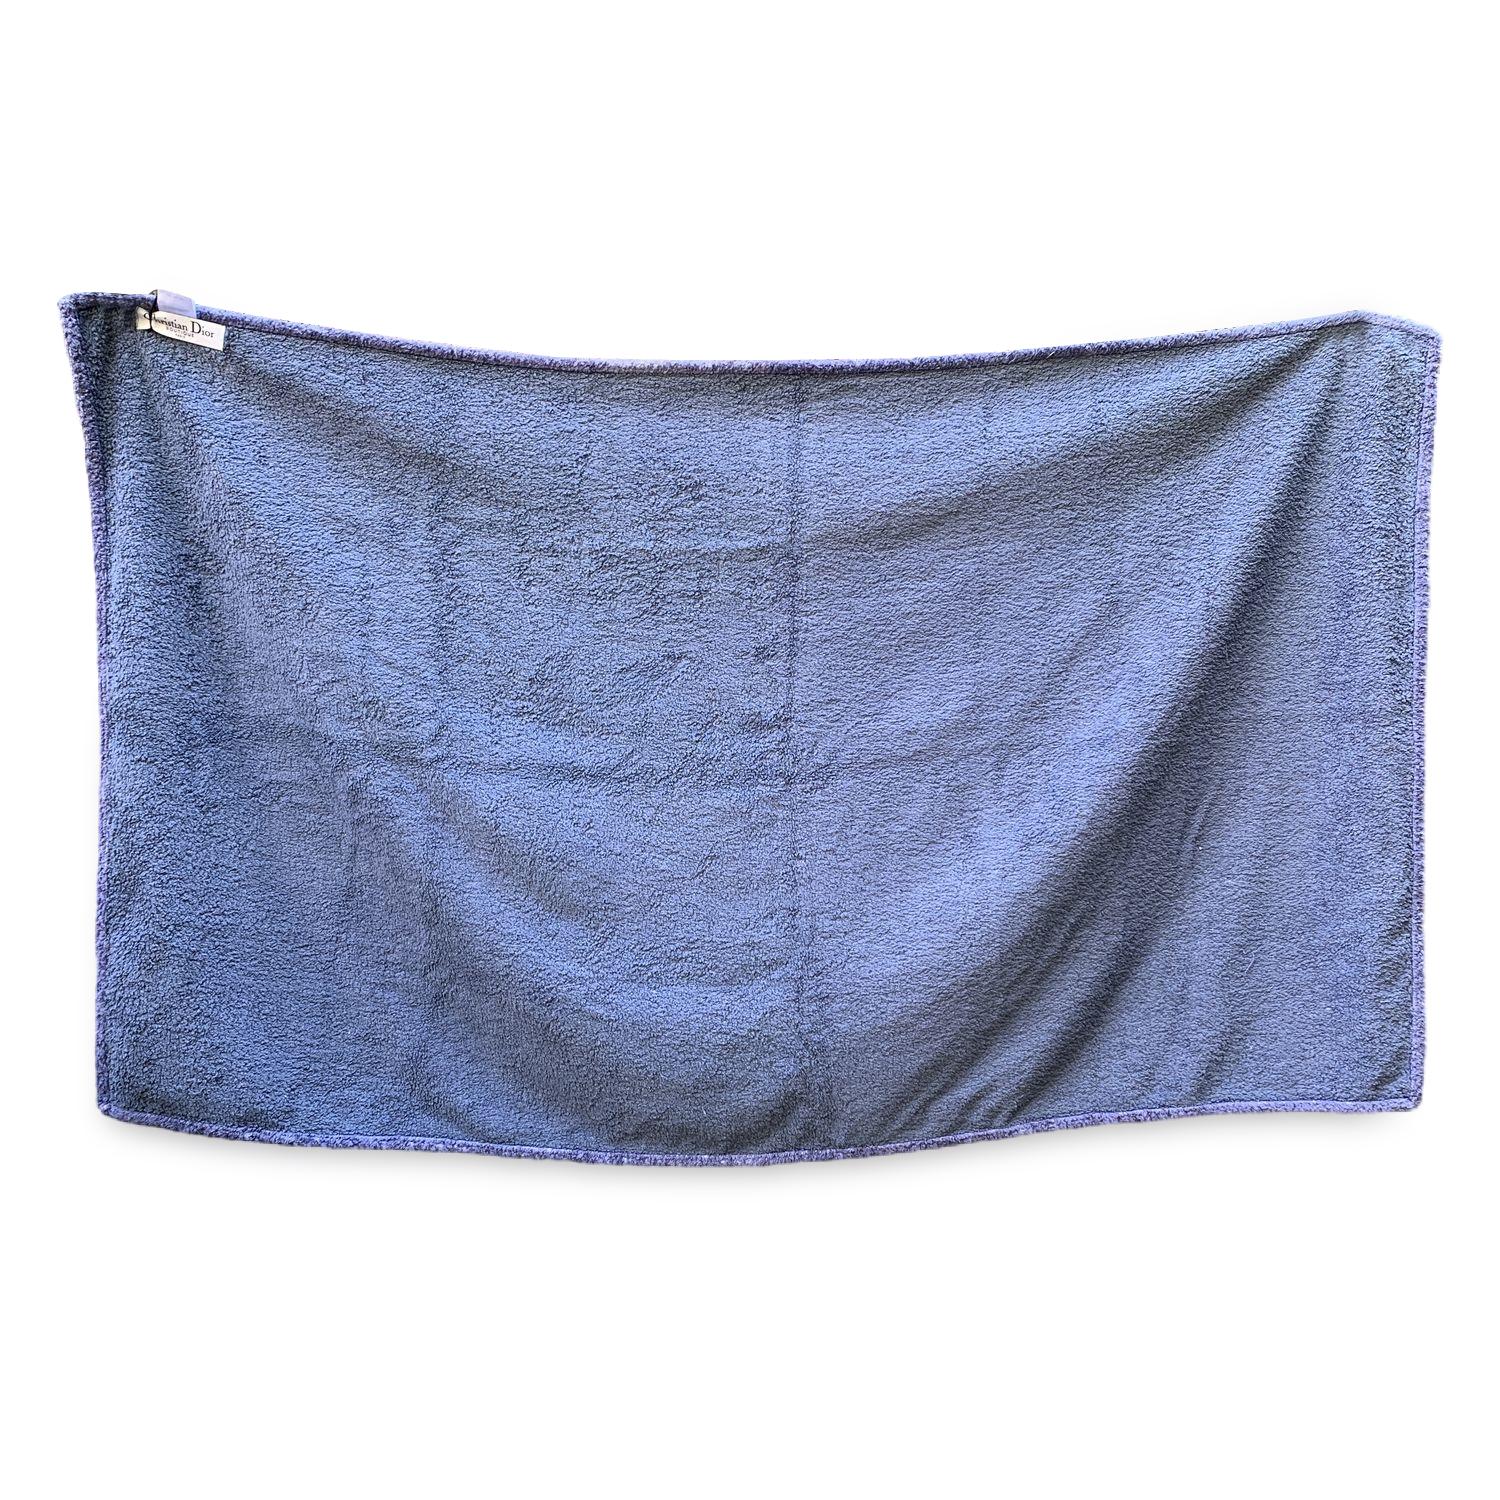 Vintage Christian Dior Terrycloth Cotton Large Beach Towel with Monogram oblique pattern. Blue color. 100% cotton. Measurements: 35 x 60 inches - 88.8 x 152.4cm.

Details

MATERIAL: Cotton

COLOR: Blue

MODEL: -

GENDER: Unisex Adults

COUNTRY OF